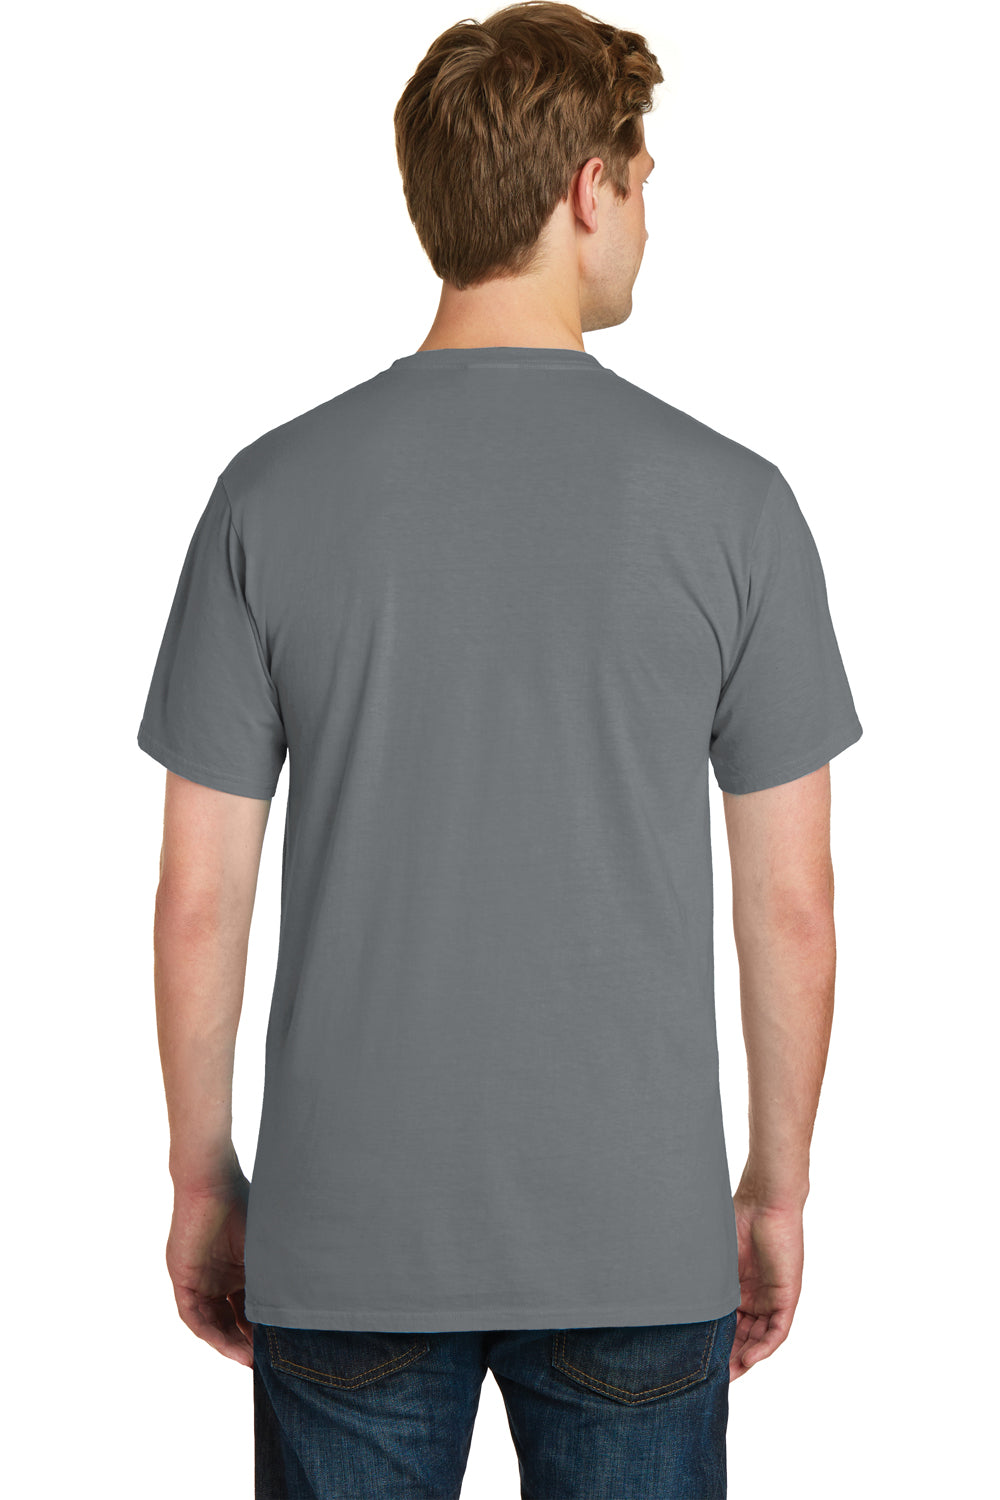 Port & Company PC099P Mens Beach Wash Short Sleeve Crewneck T-Shirt w/ Pocket Coal Grey Back